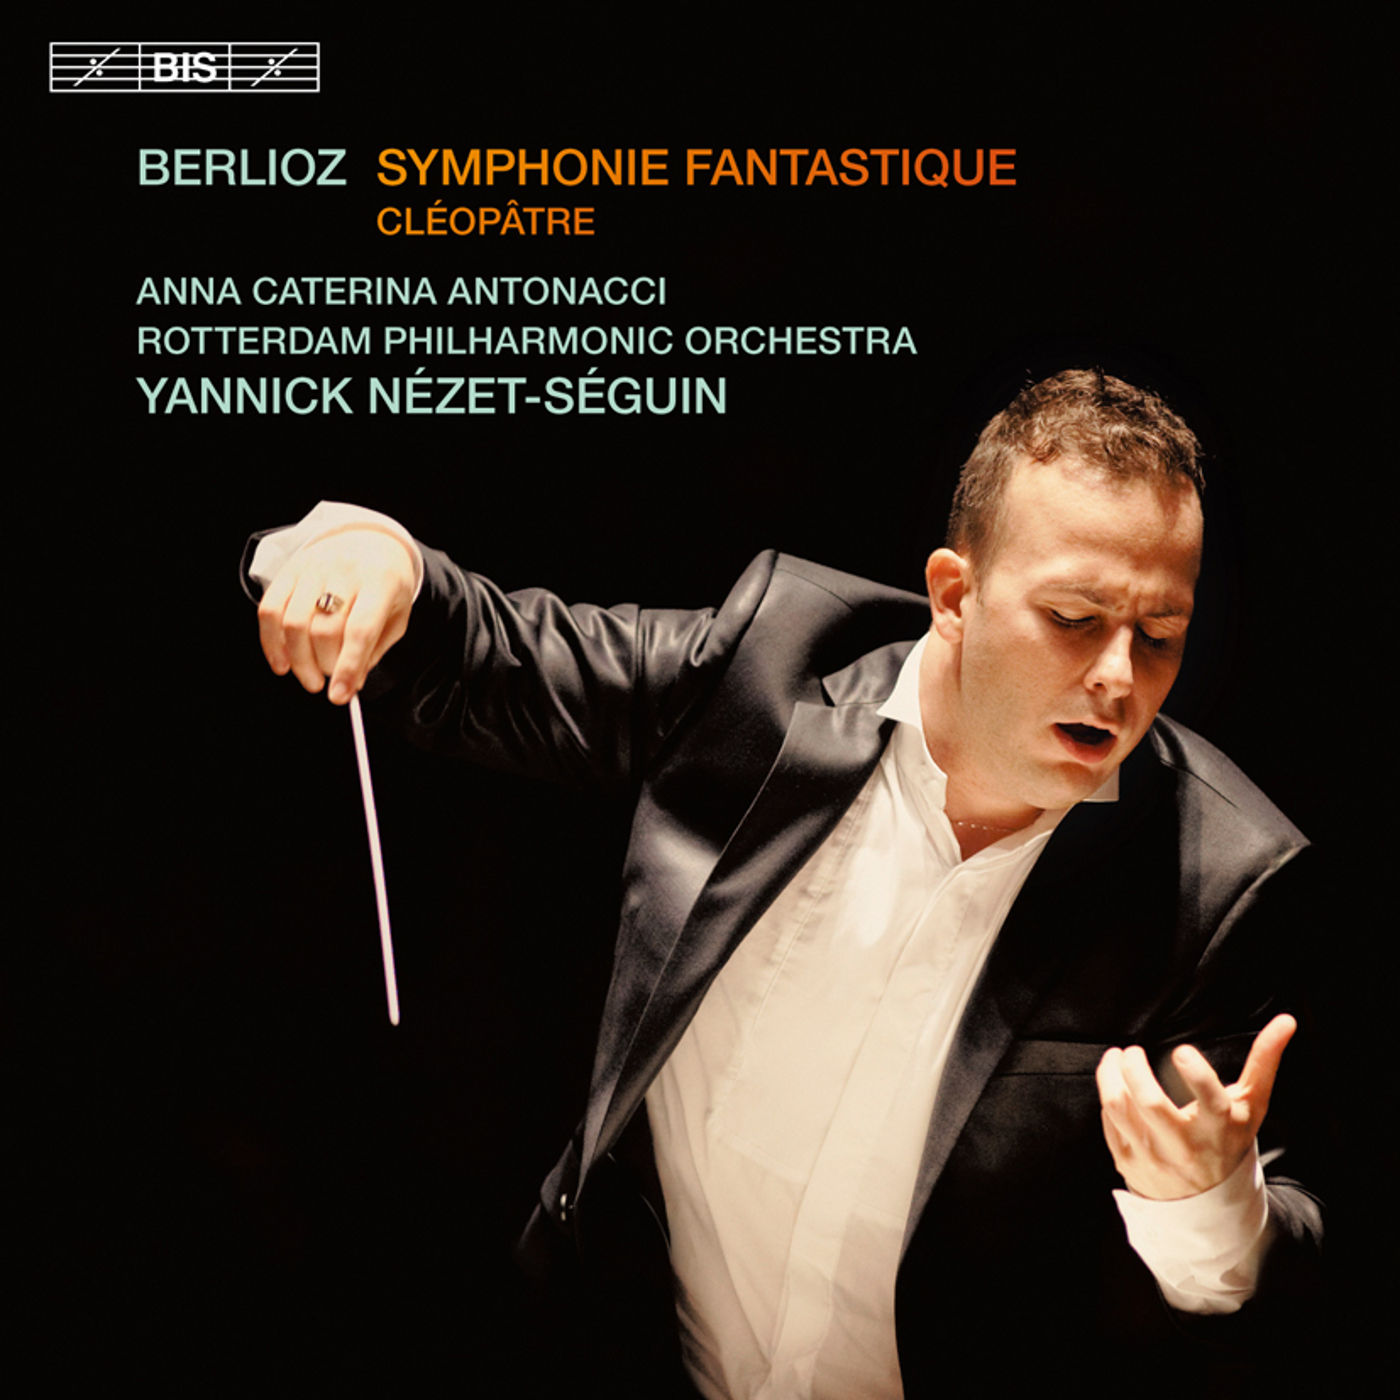 Yannick Nzet-Sguin - Berlioz Symphonie fantastique Cleopatre 24-44.1